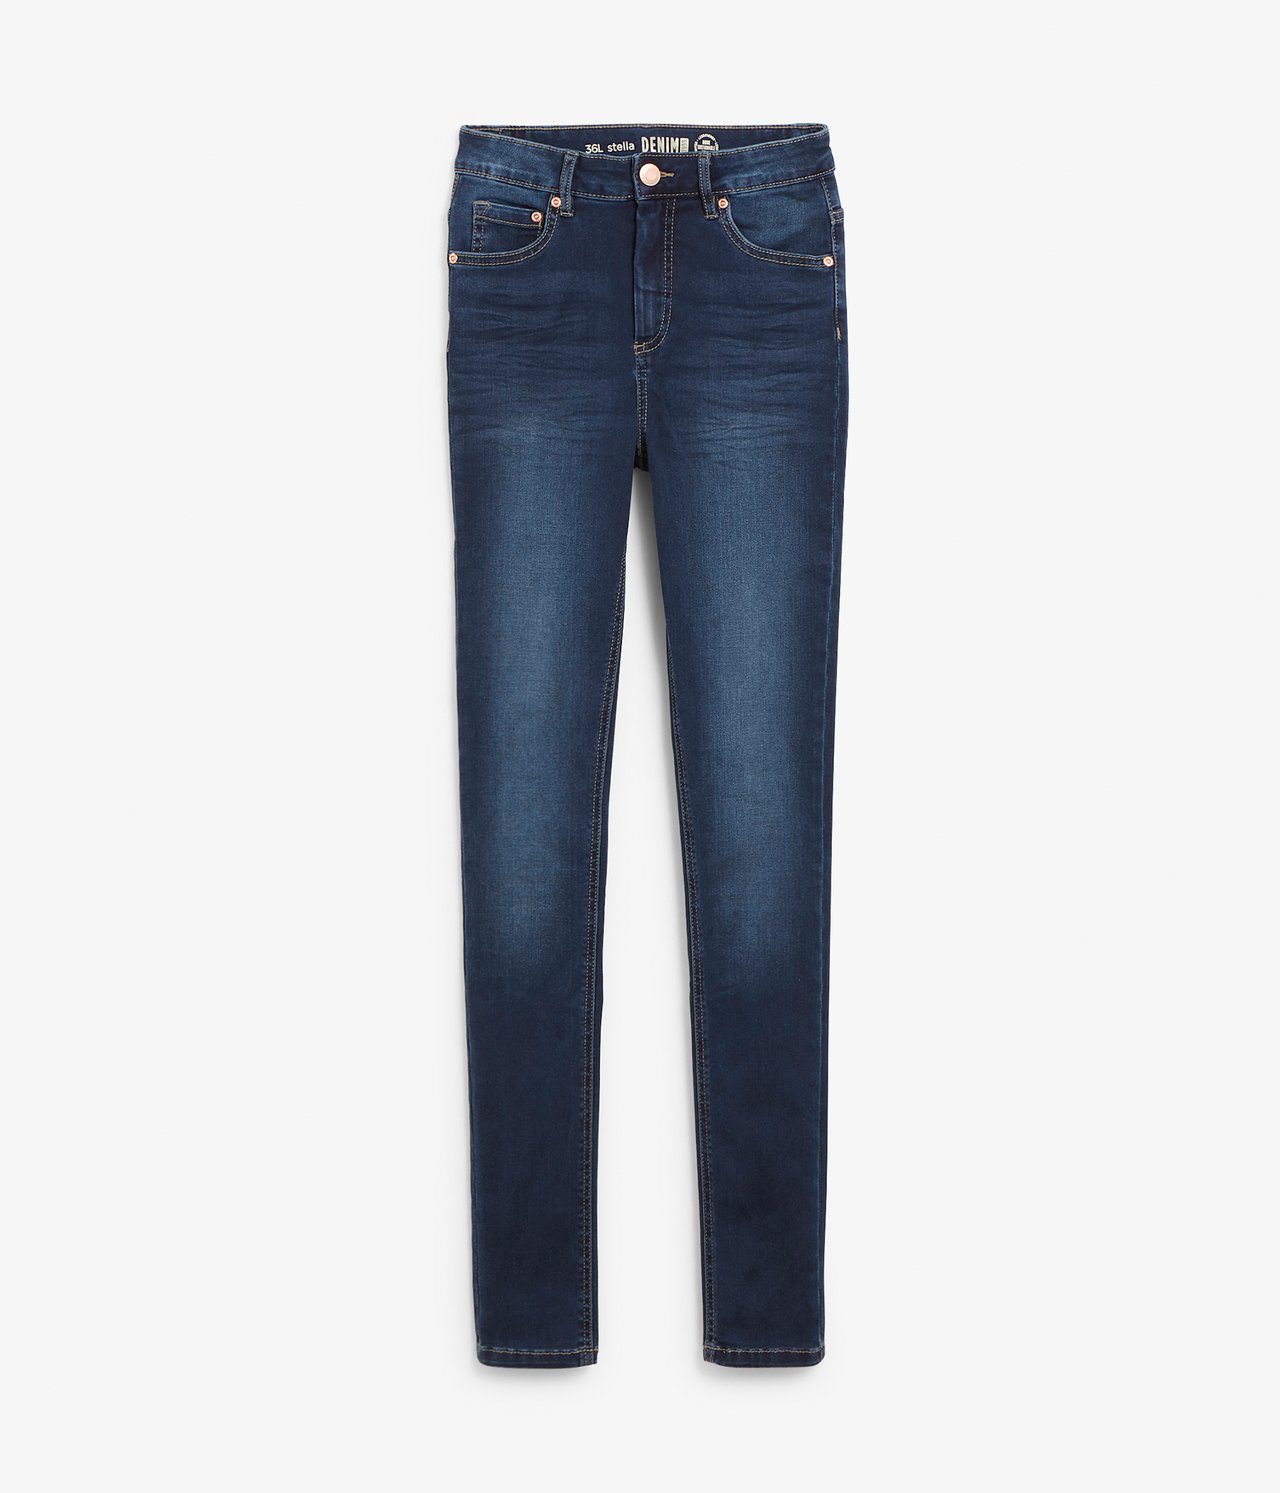 Super slim jeans extra long leg Tumma denimi - null - 5